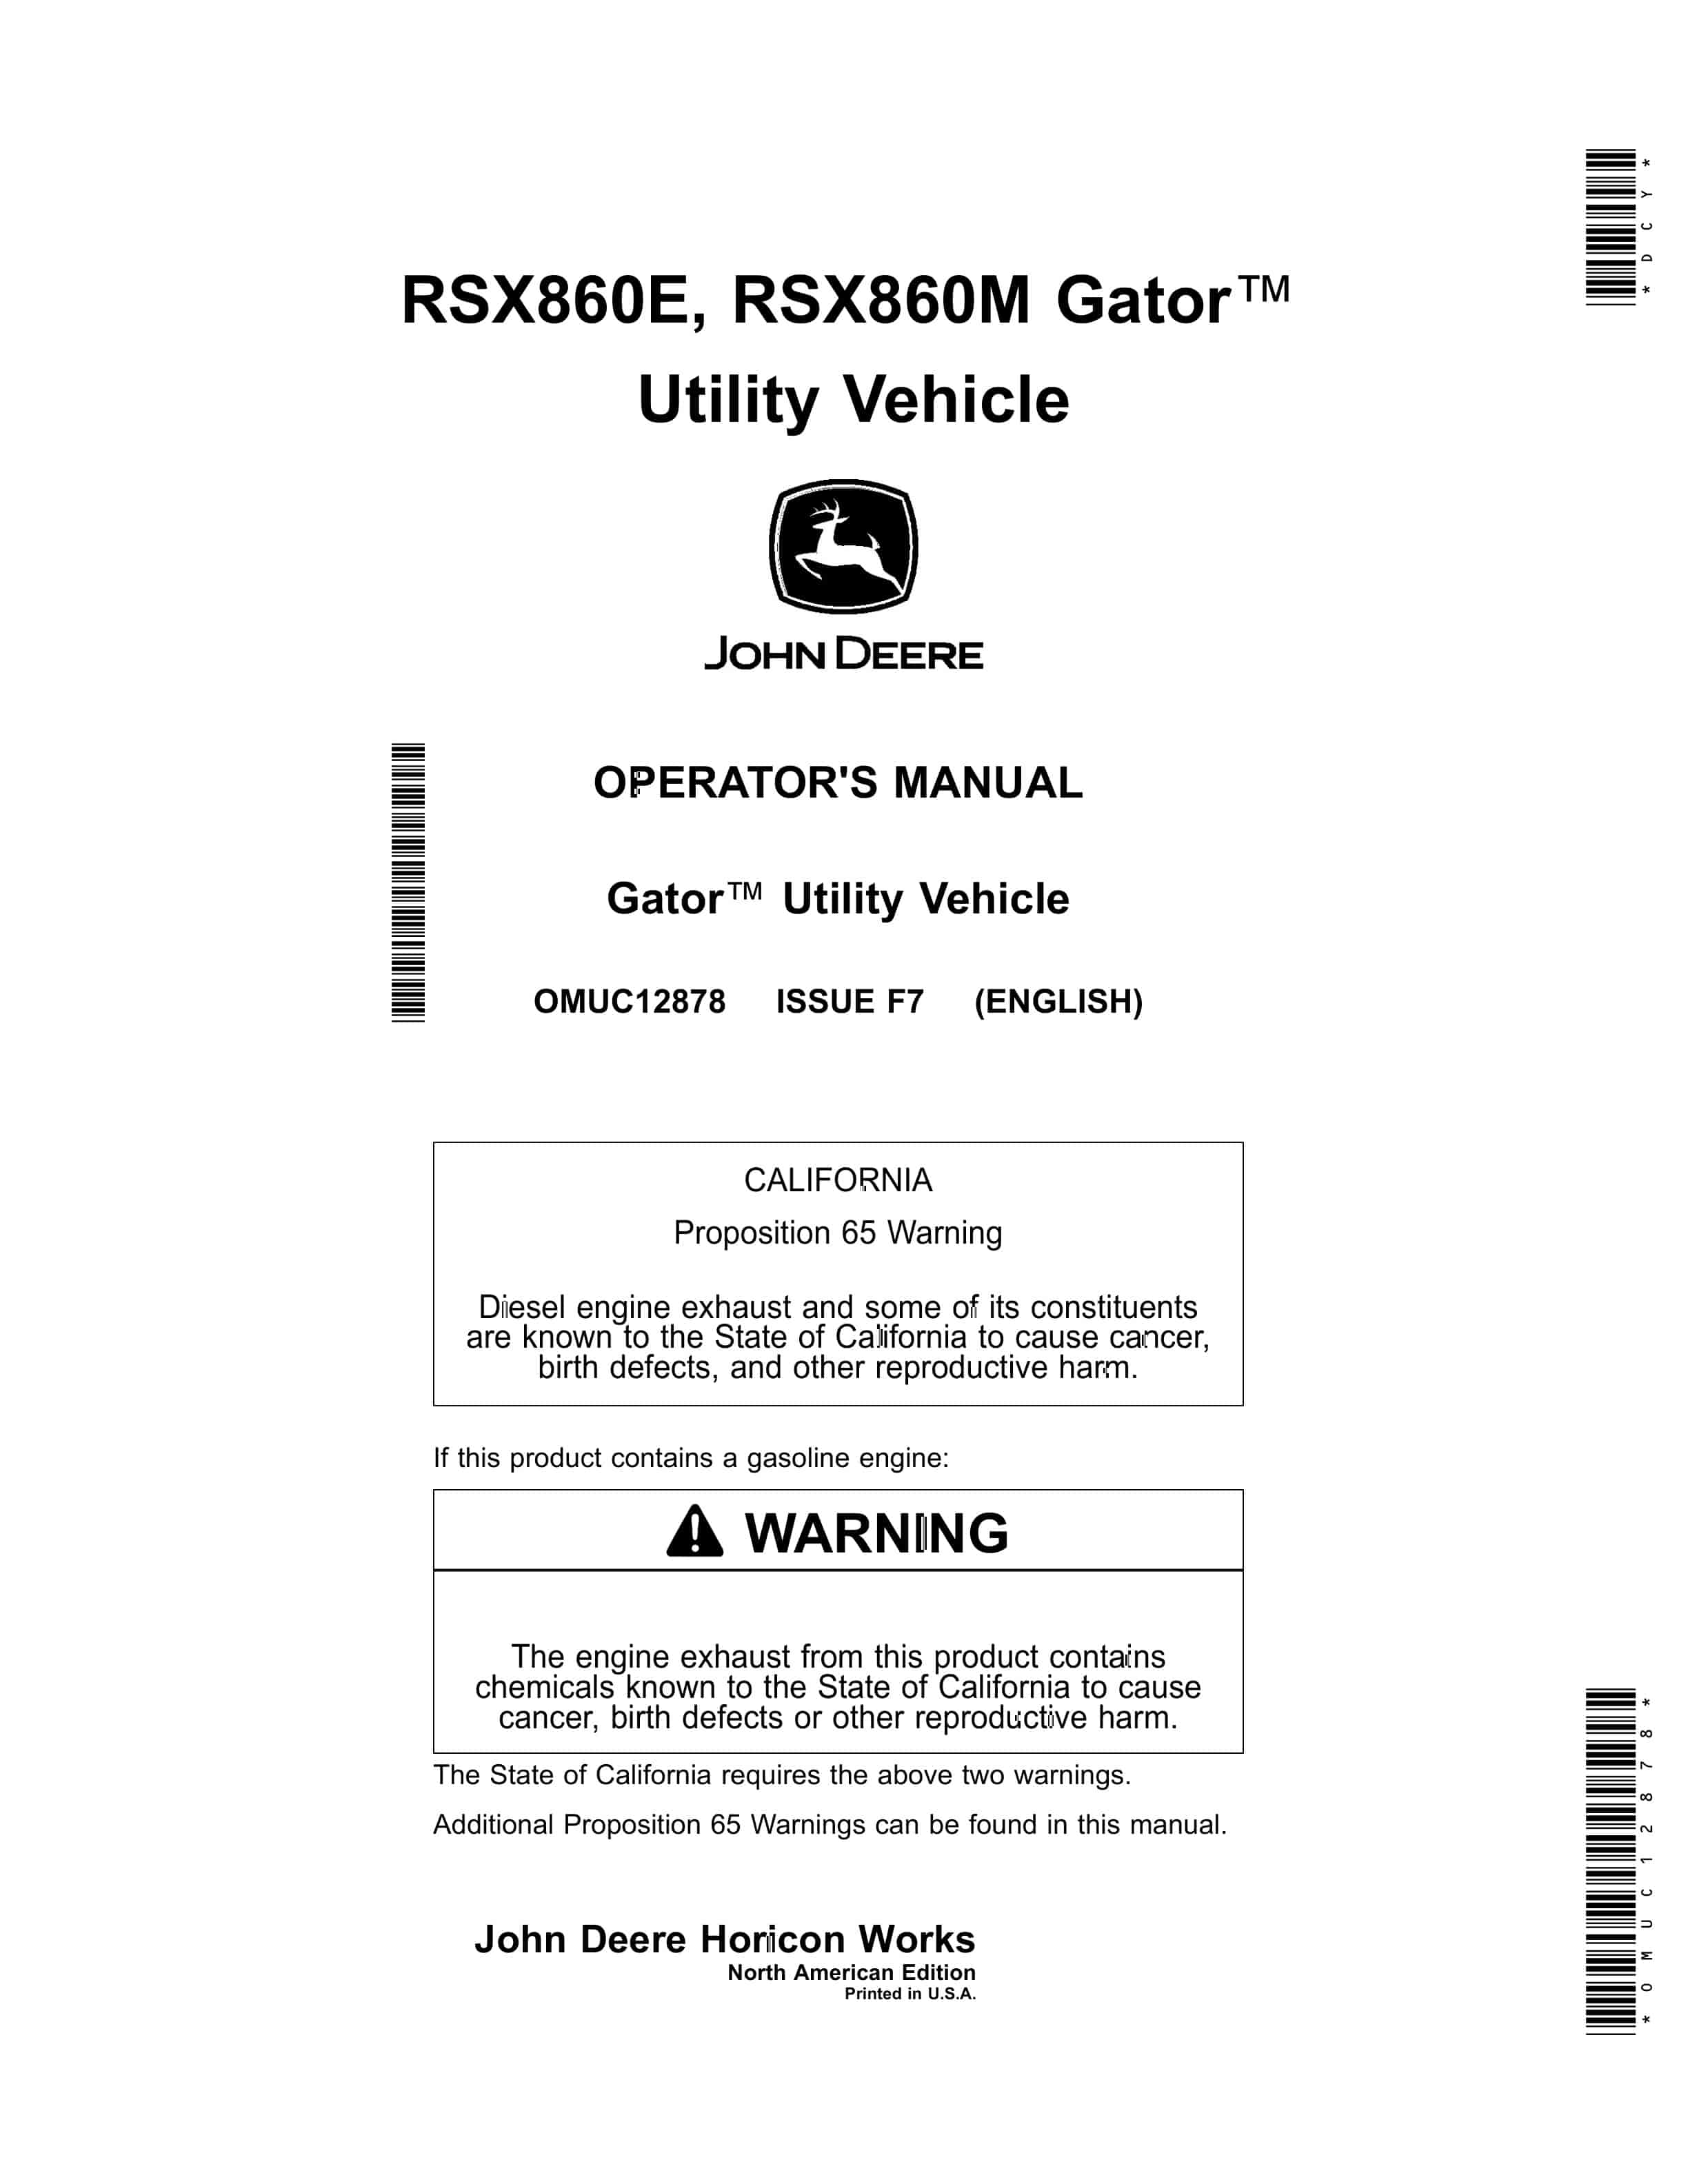 John Deere RSX860E RSX860M Gator Utility Vehicles Operator Manual OMUC12878 1